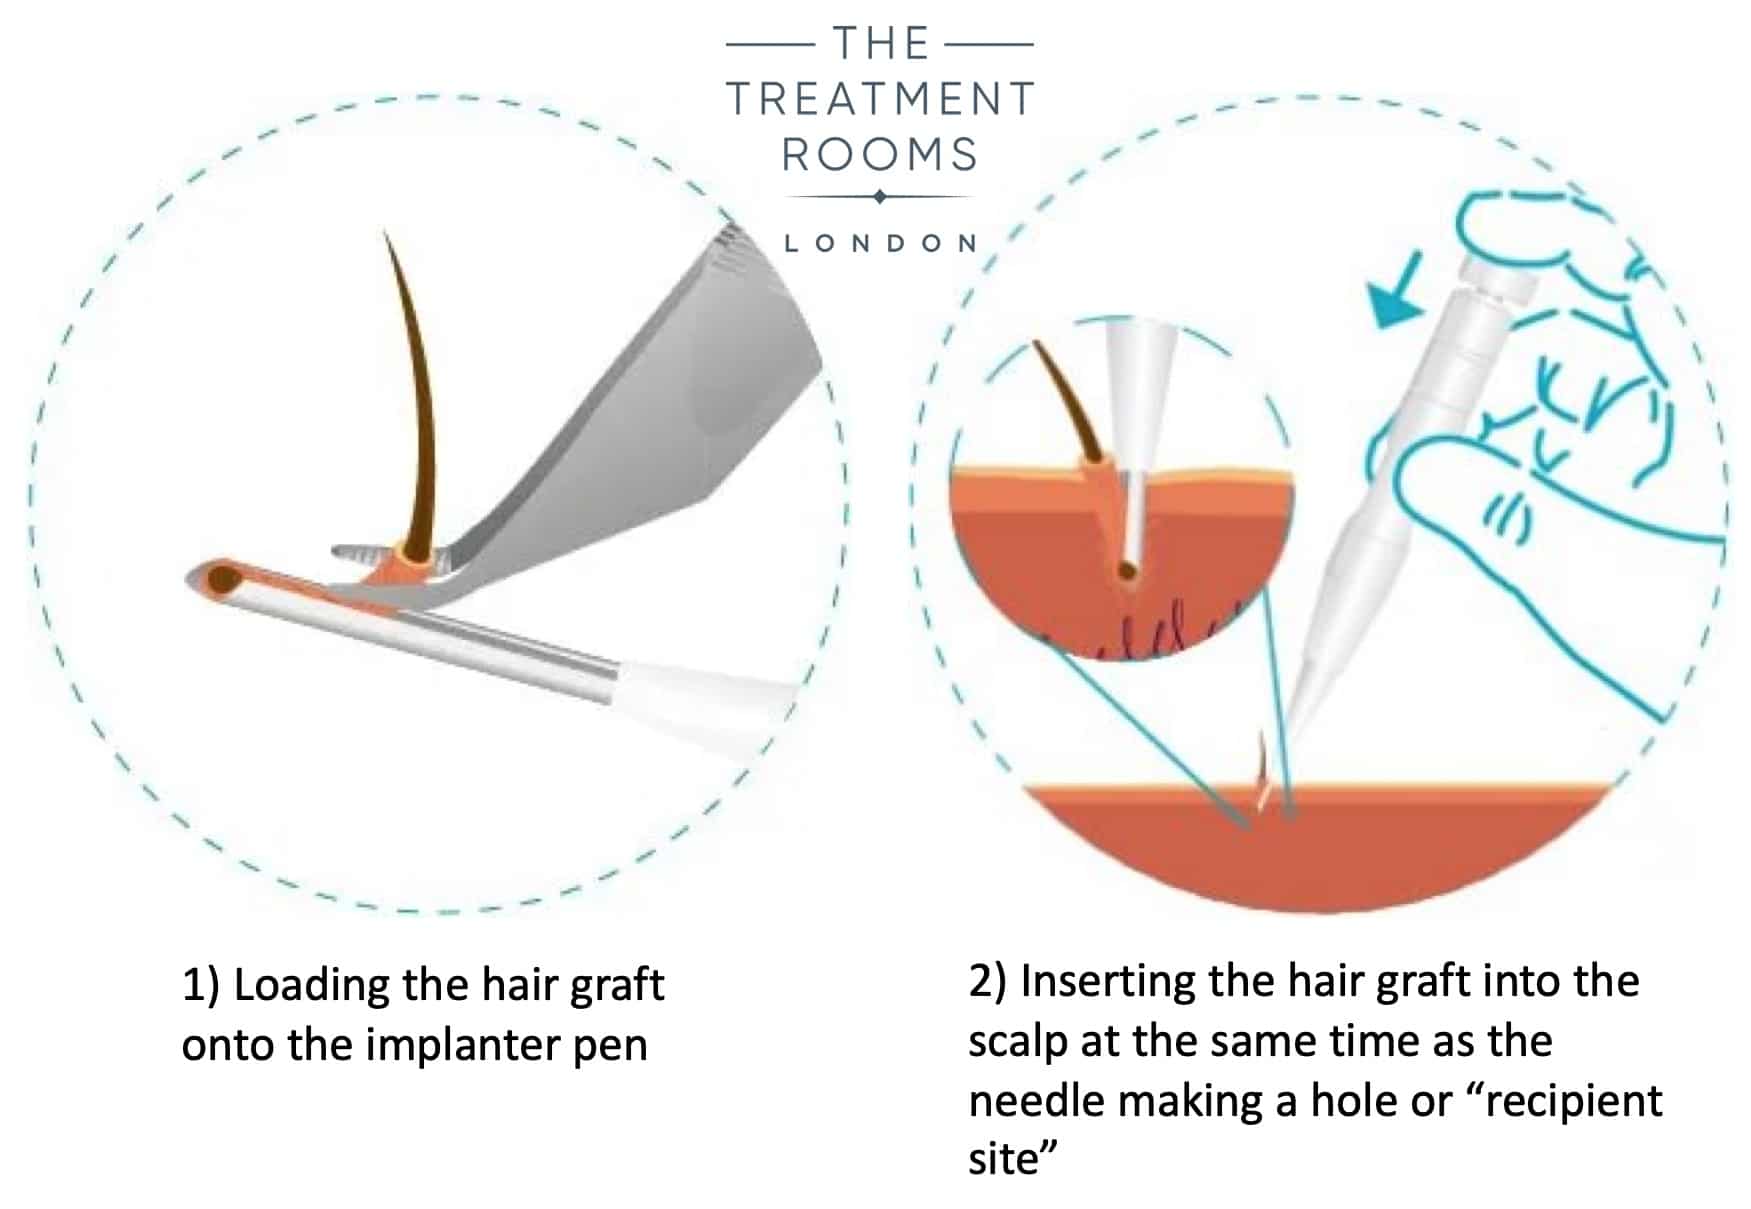 DHI implanter pen hair transplant information graphic